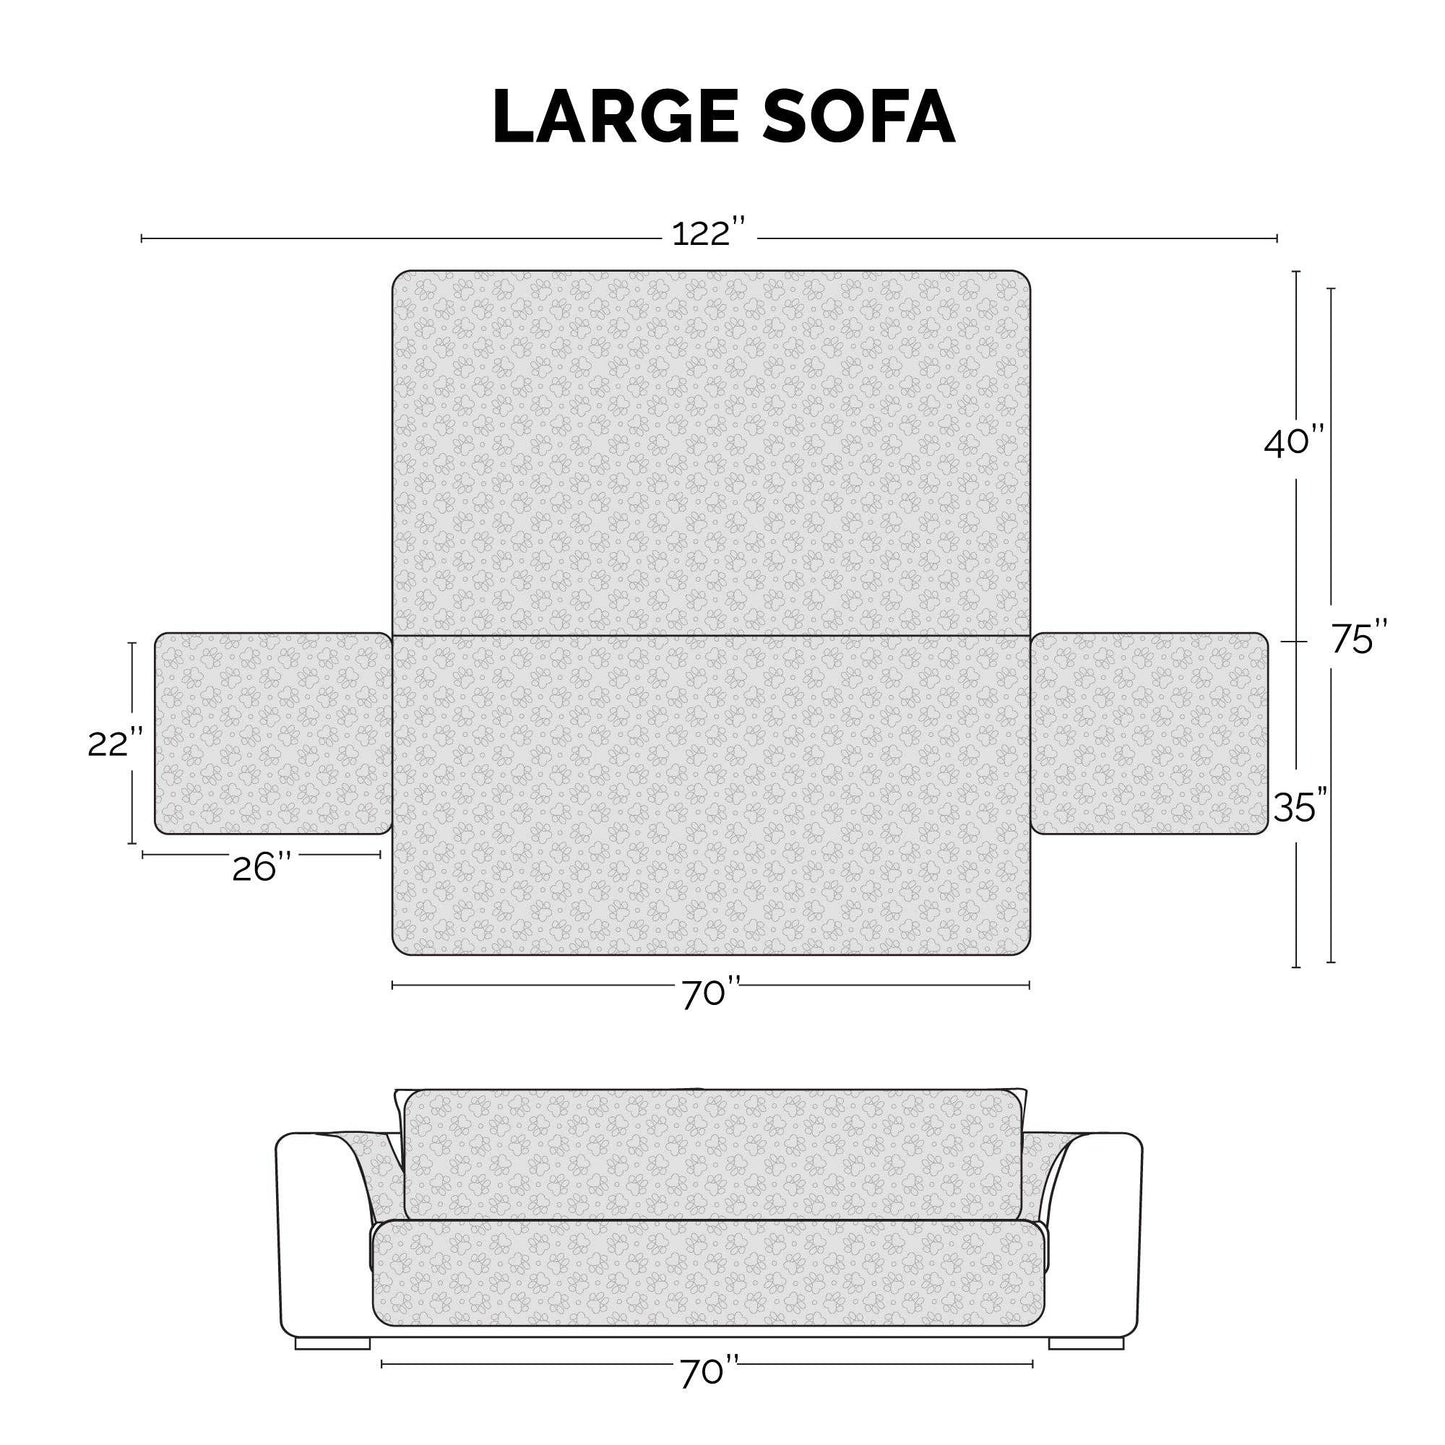 Non-Skid Back Waterproof Furniture Protector: Sofa / Gray